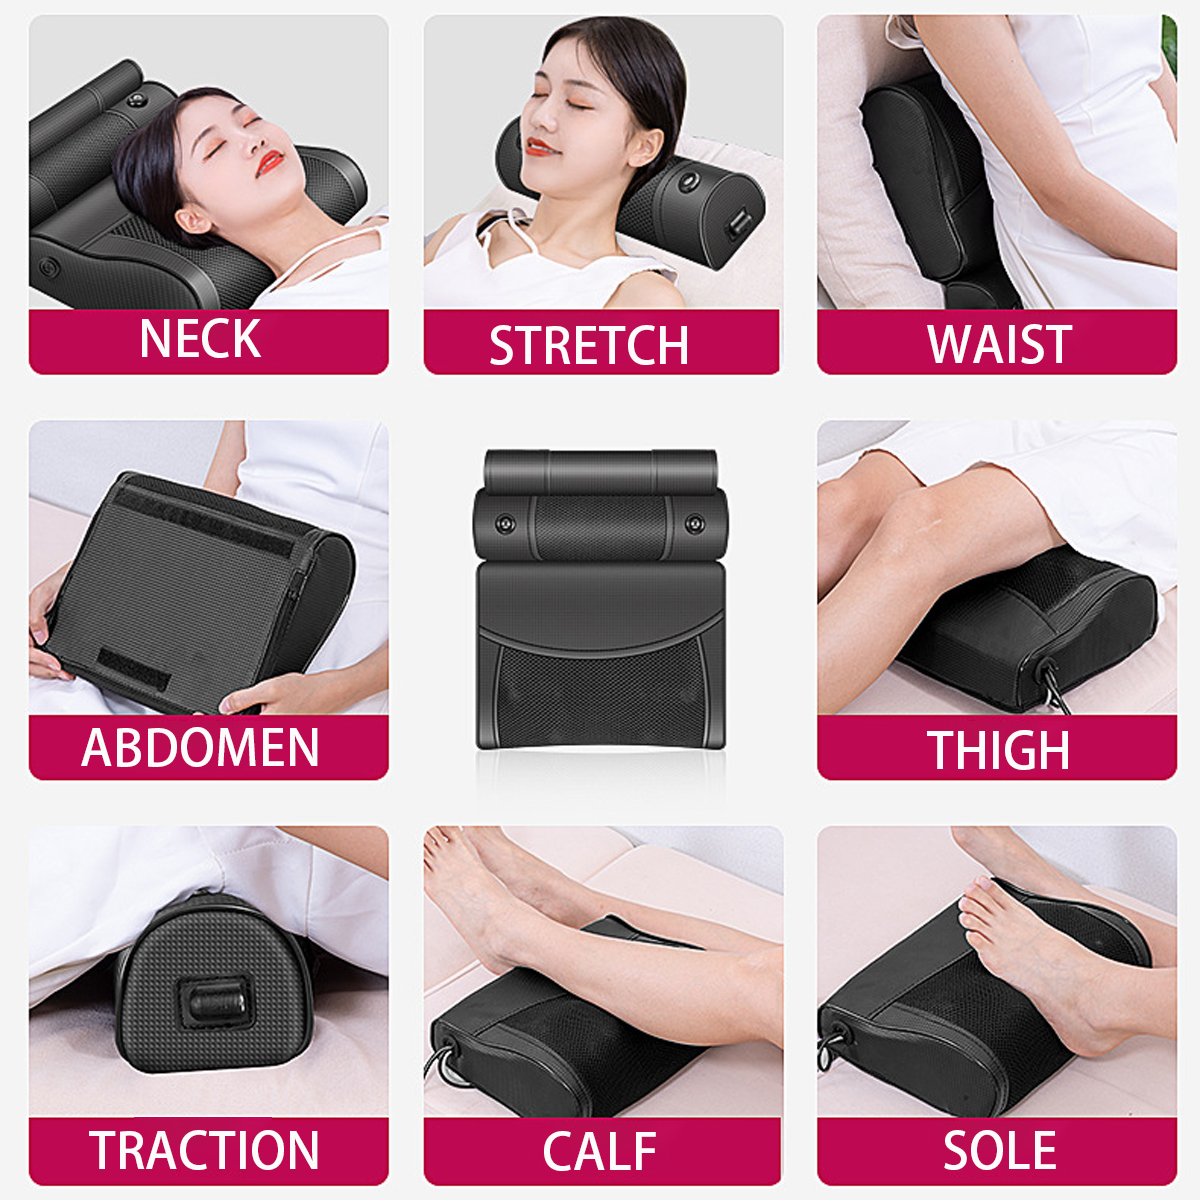 Intelligent-Overheating-Protection-Cervical-Spine-Massager-Detachable-Multi-stage-Airbag-Neck-Massag-1932593-4